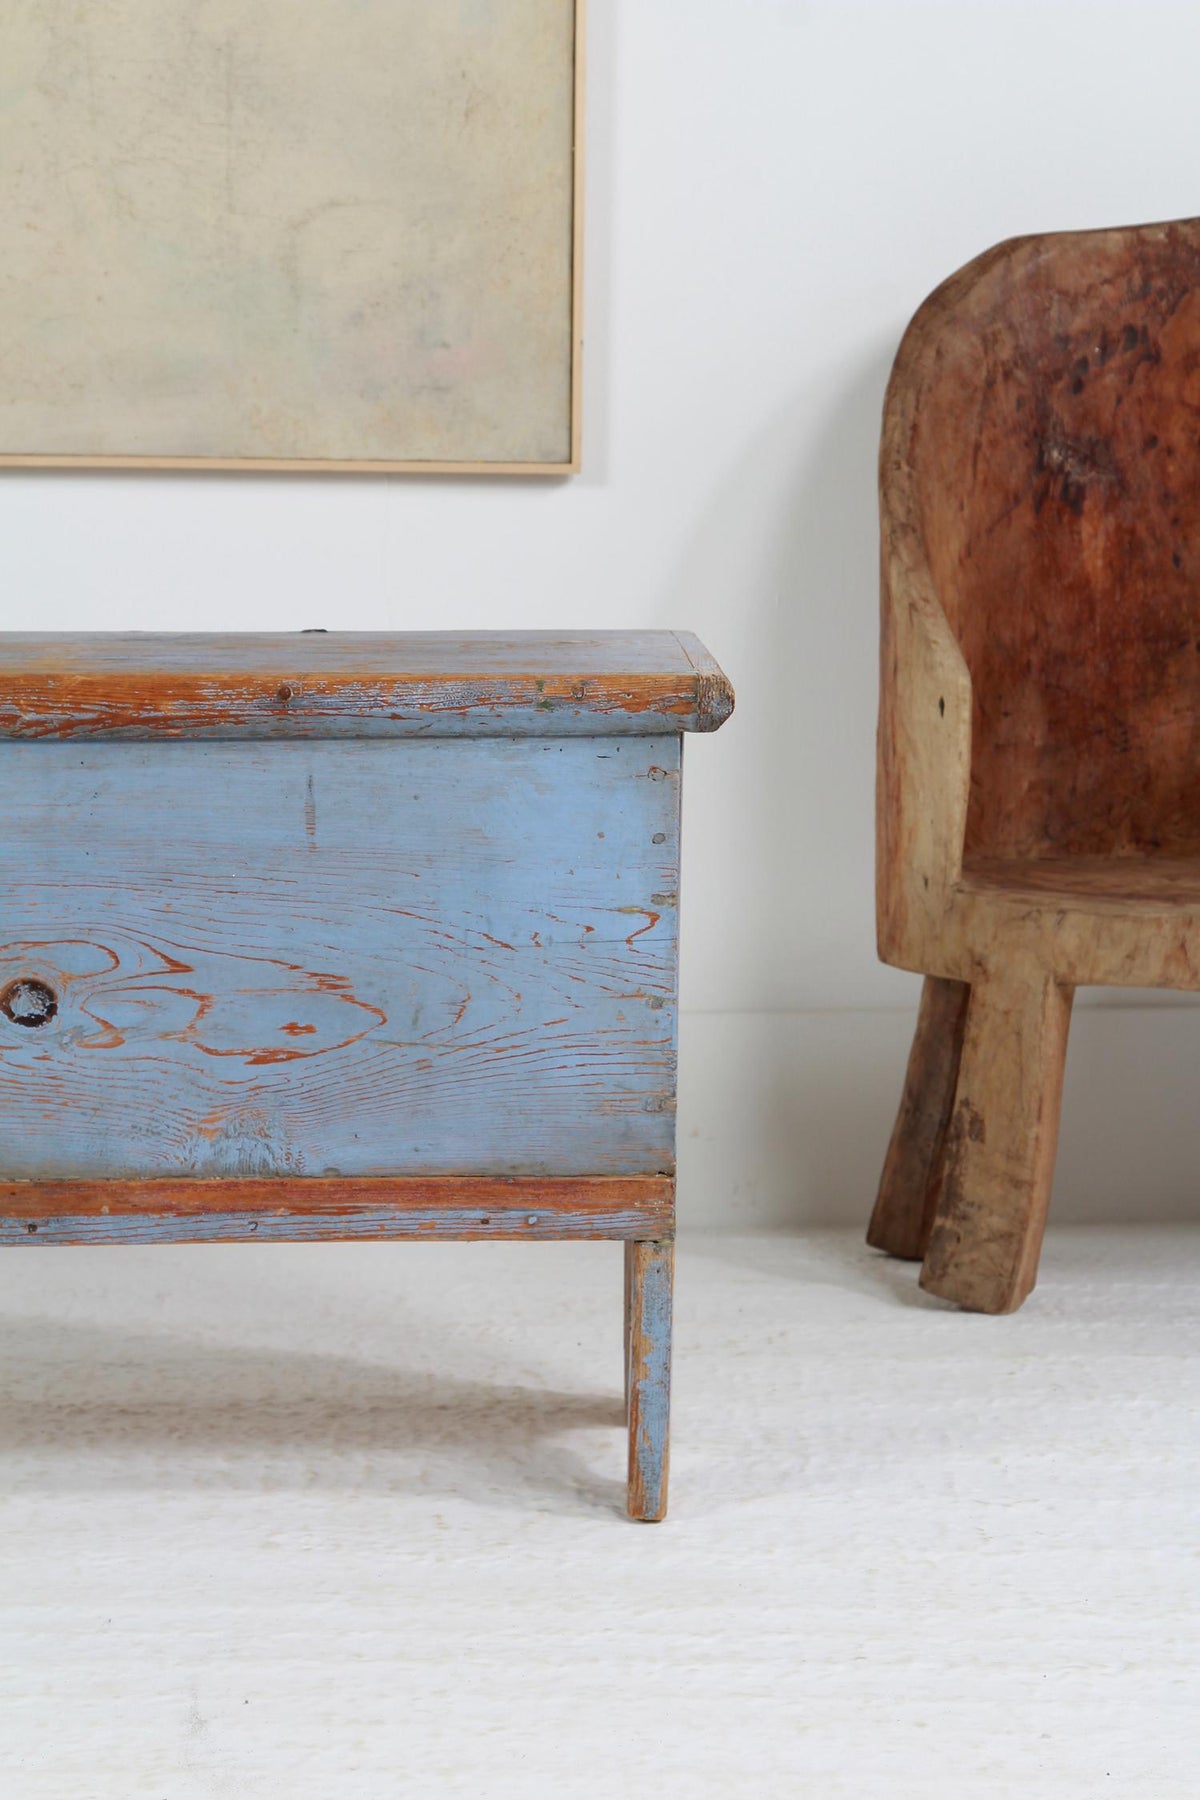 Antique Storage  Box or Bench in  Original Pale  Blue Paint